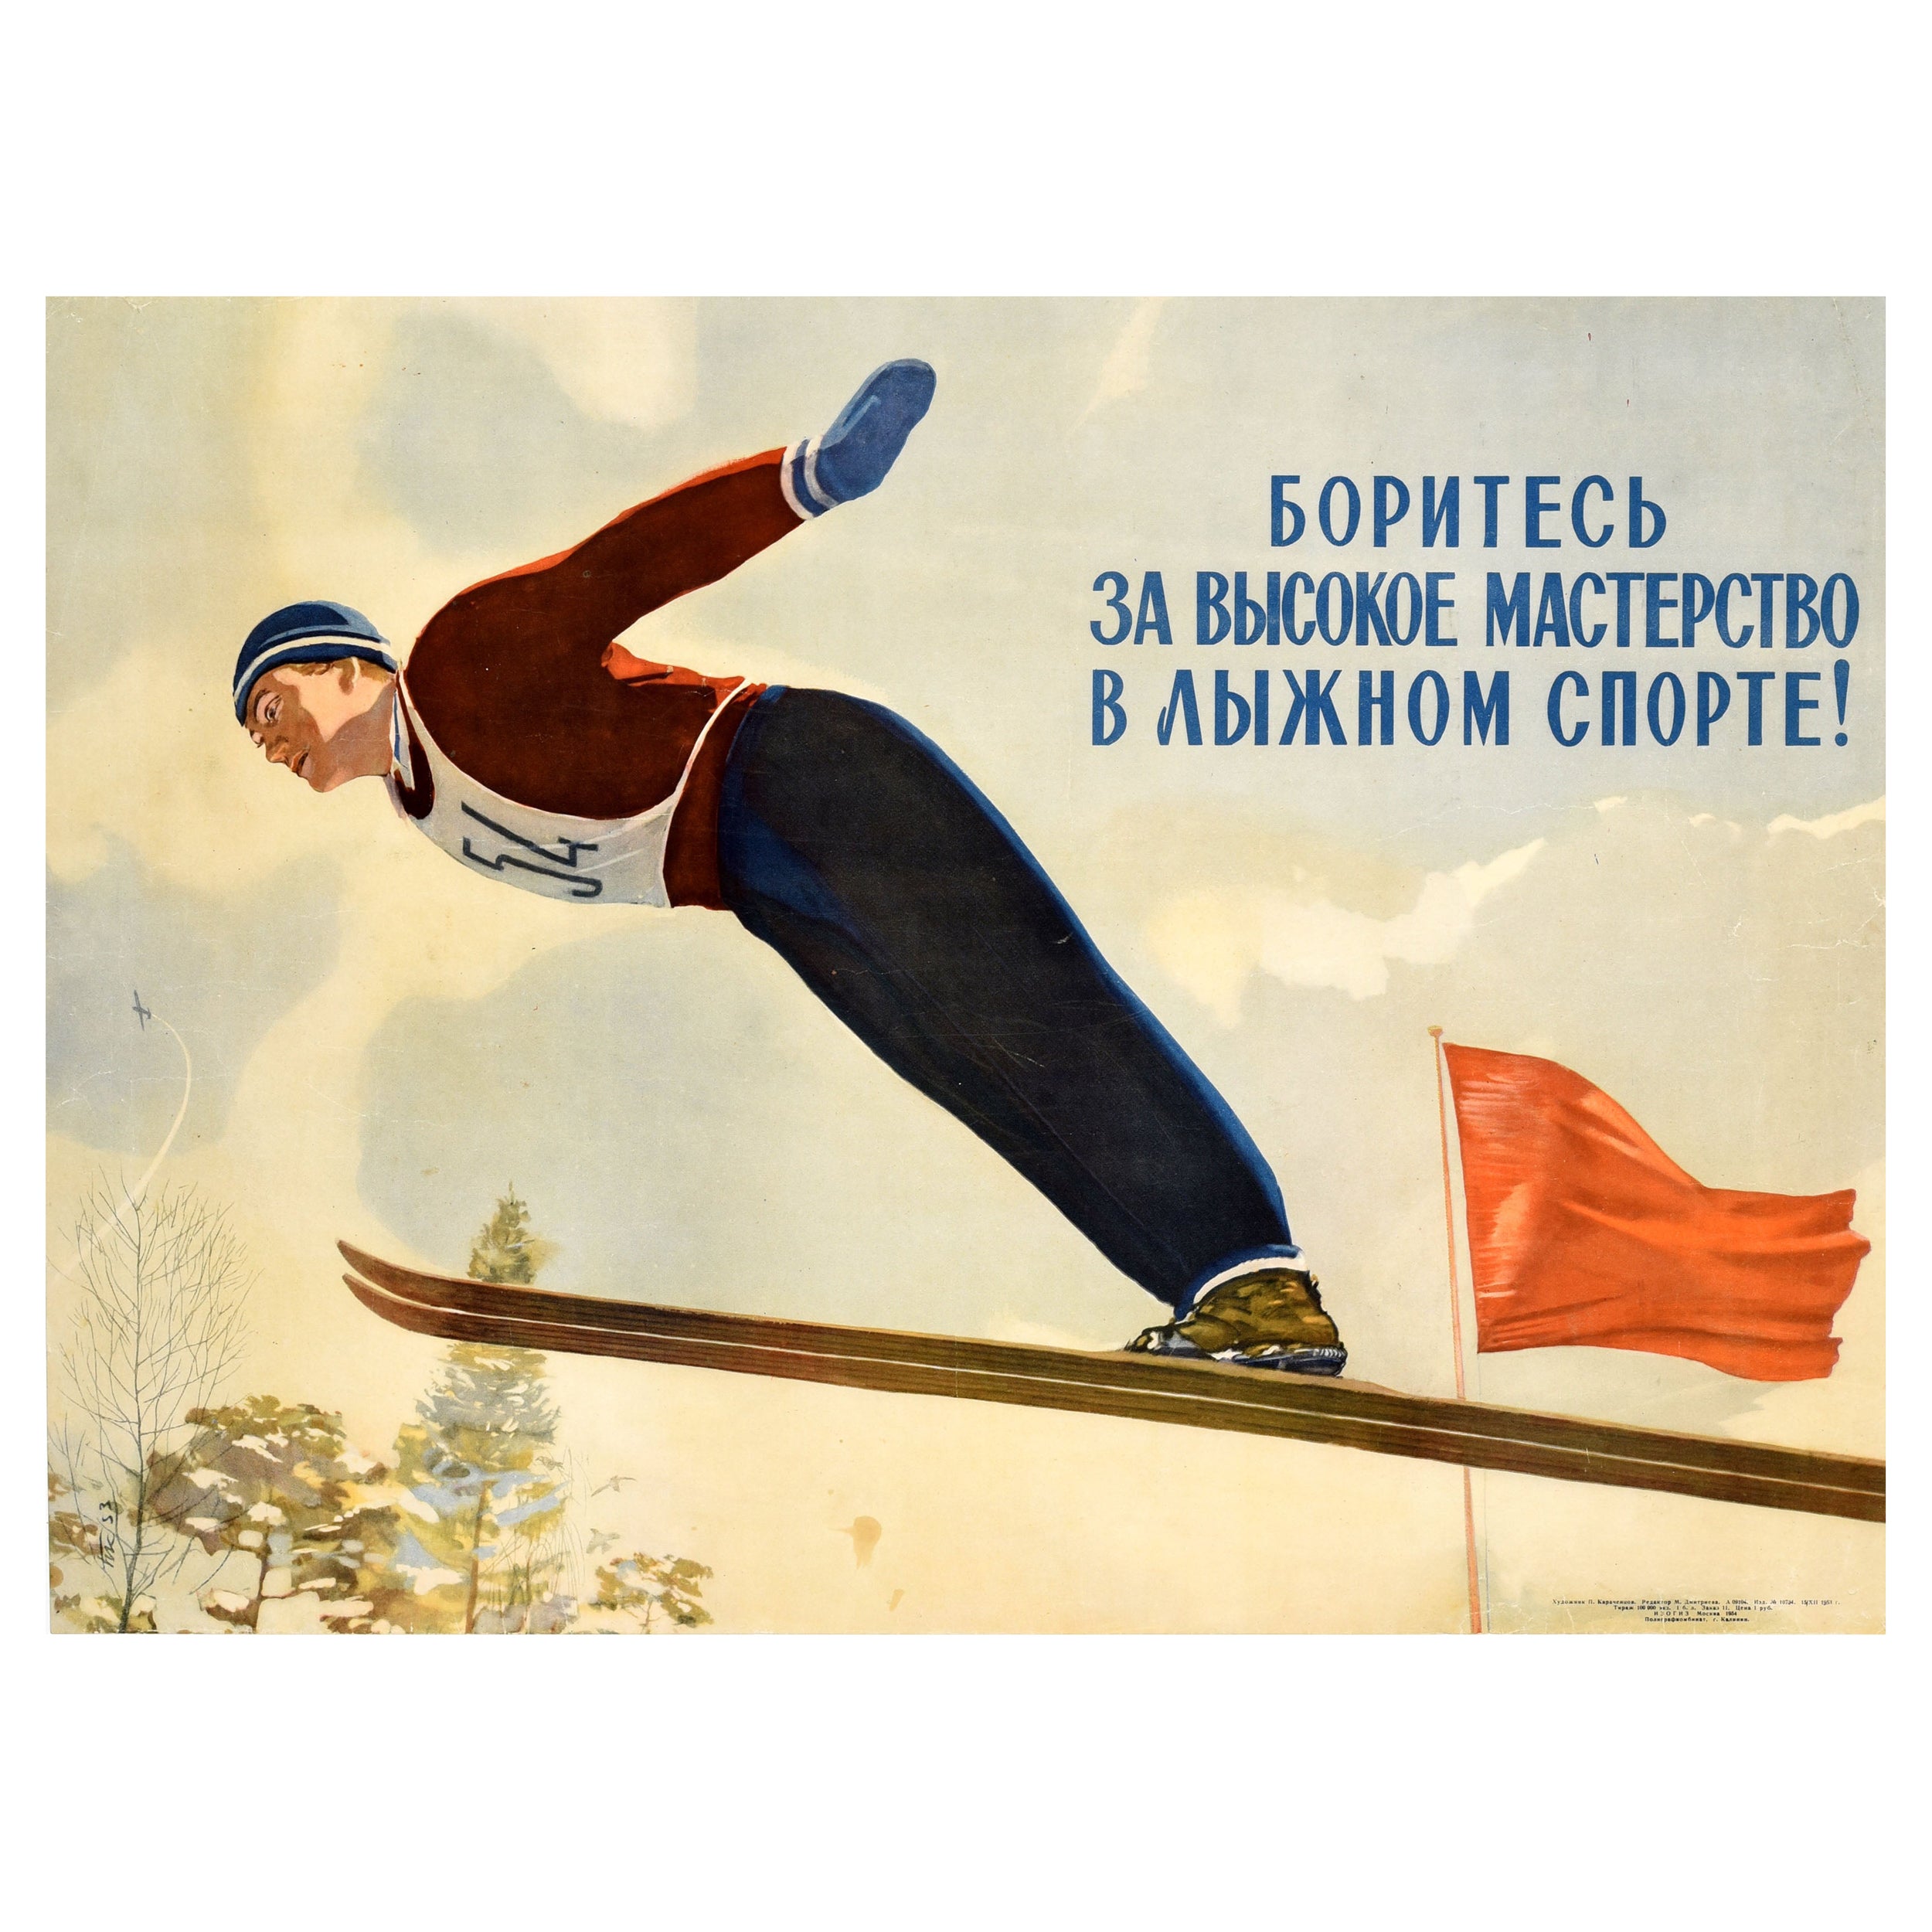 Original Vintage Soviet Sport Poster Skiing Skills Winter Sports USSR Midcentury For Sale